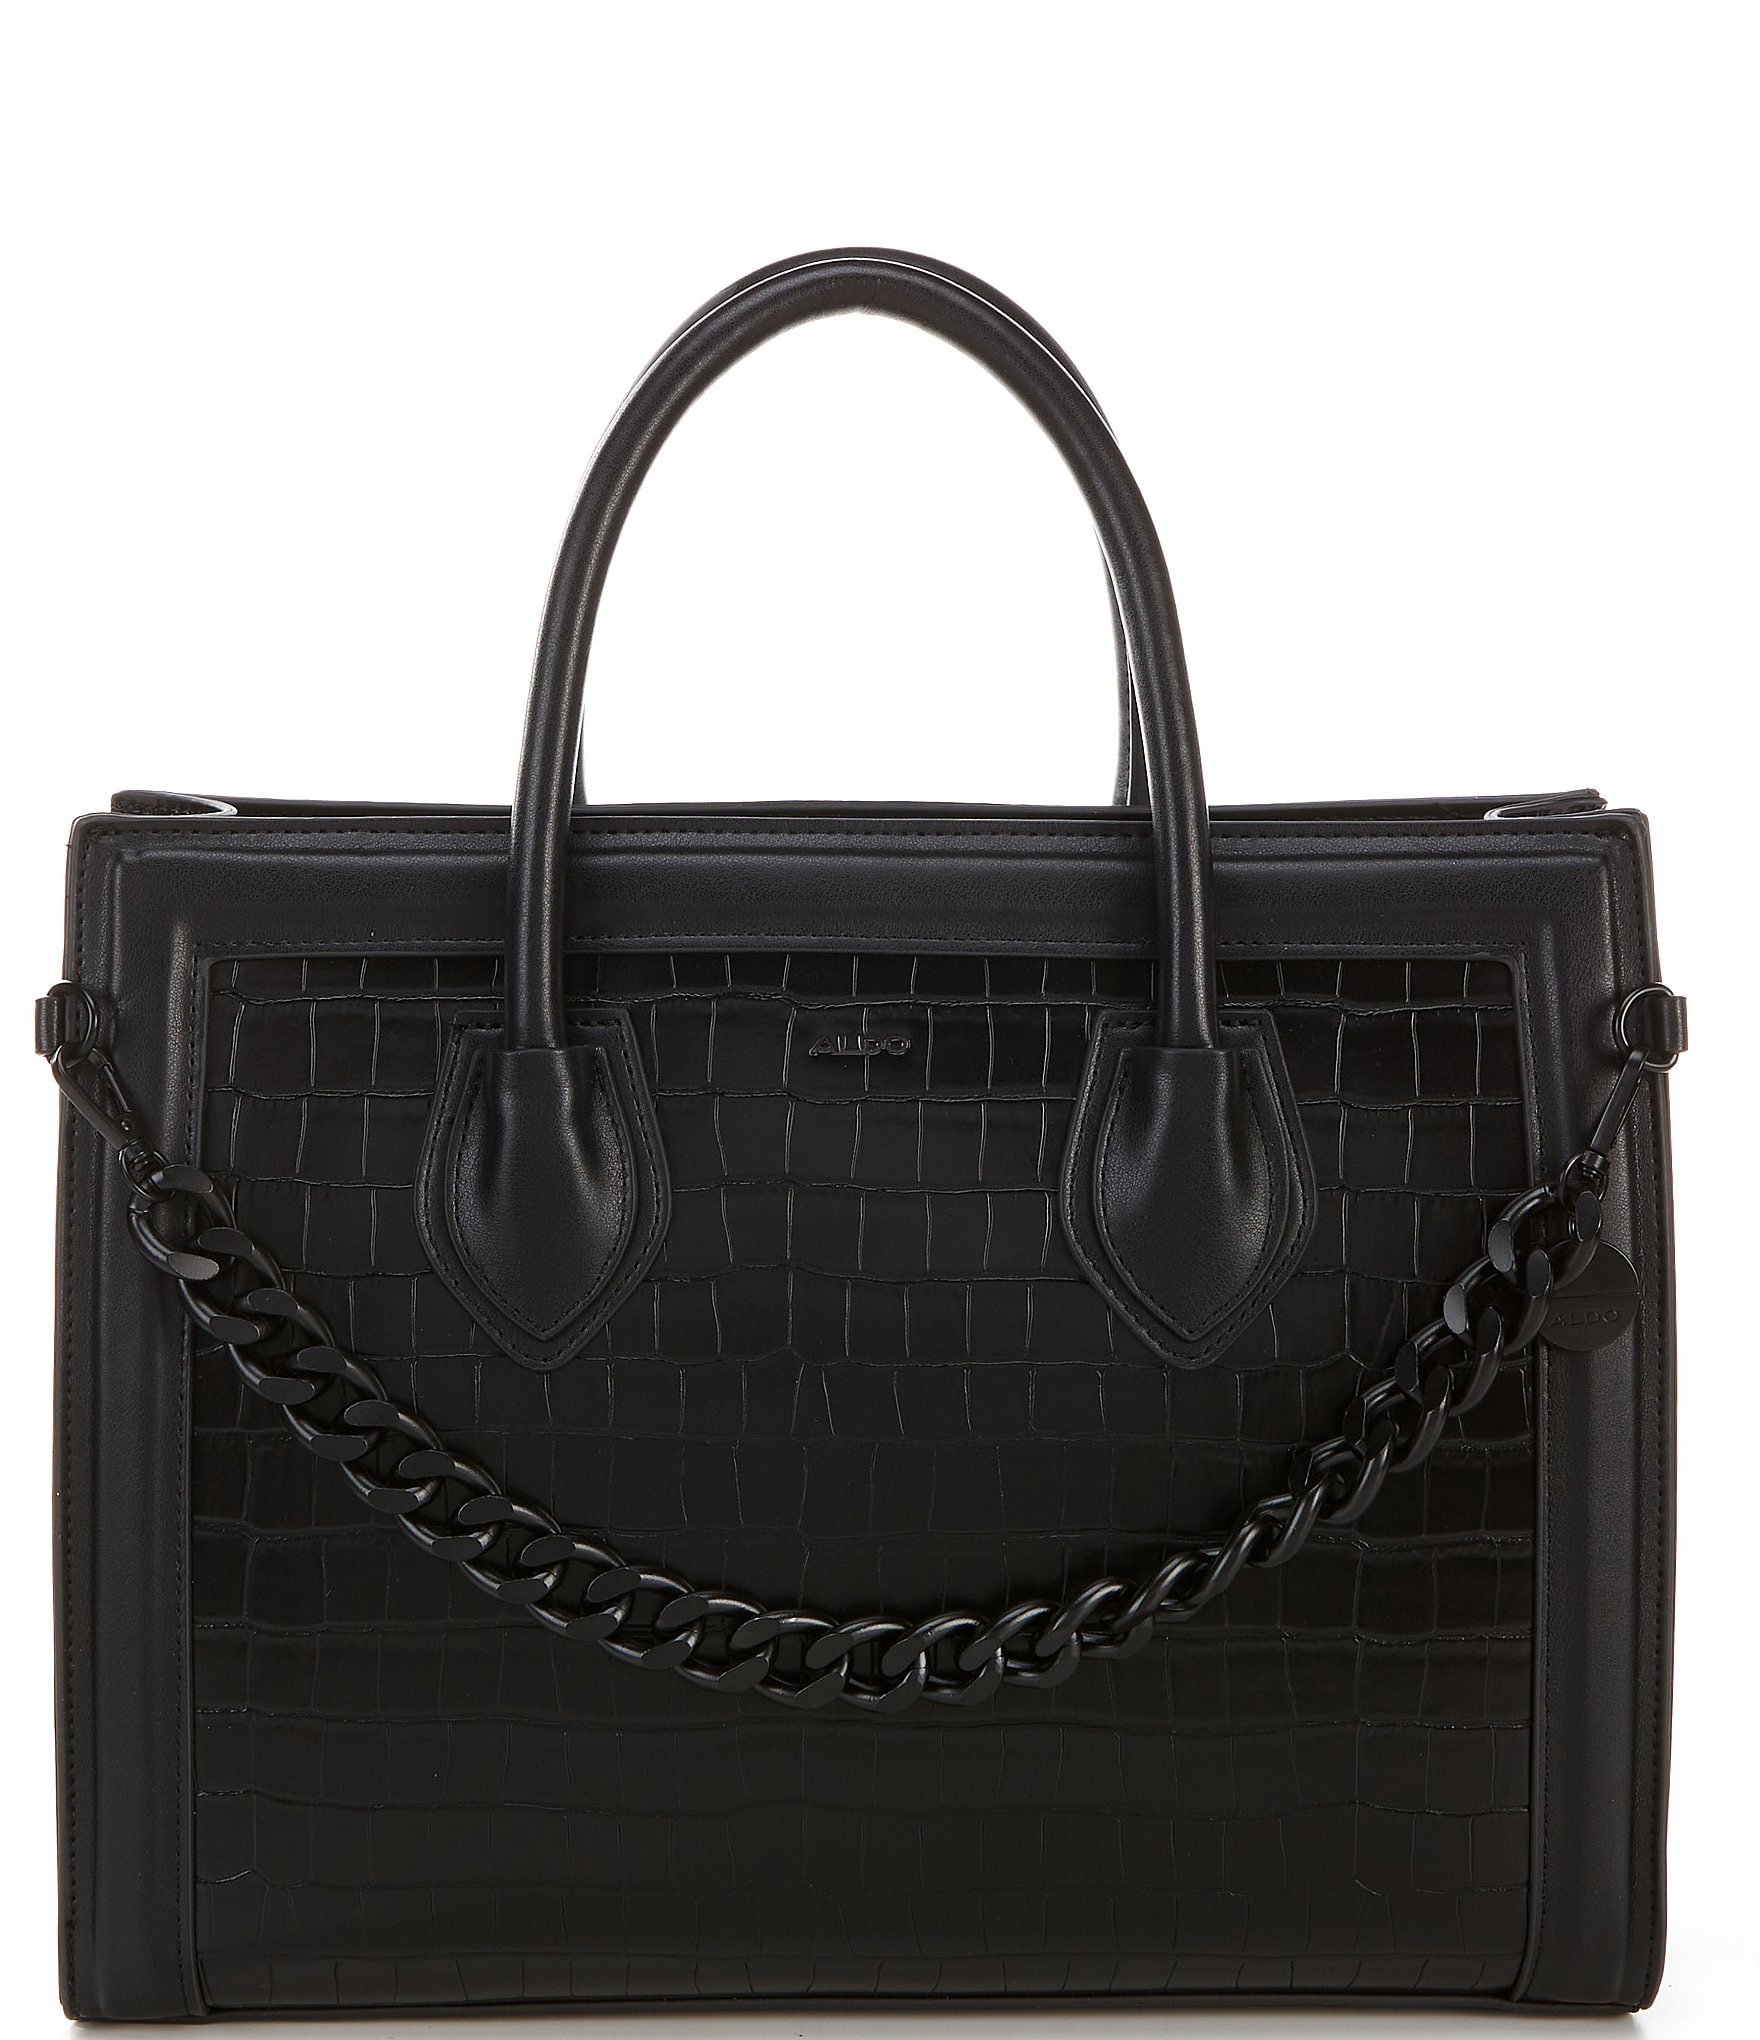 Leather handbag ALDO Black in Leather - 27657960